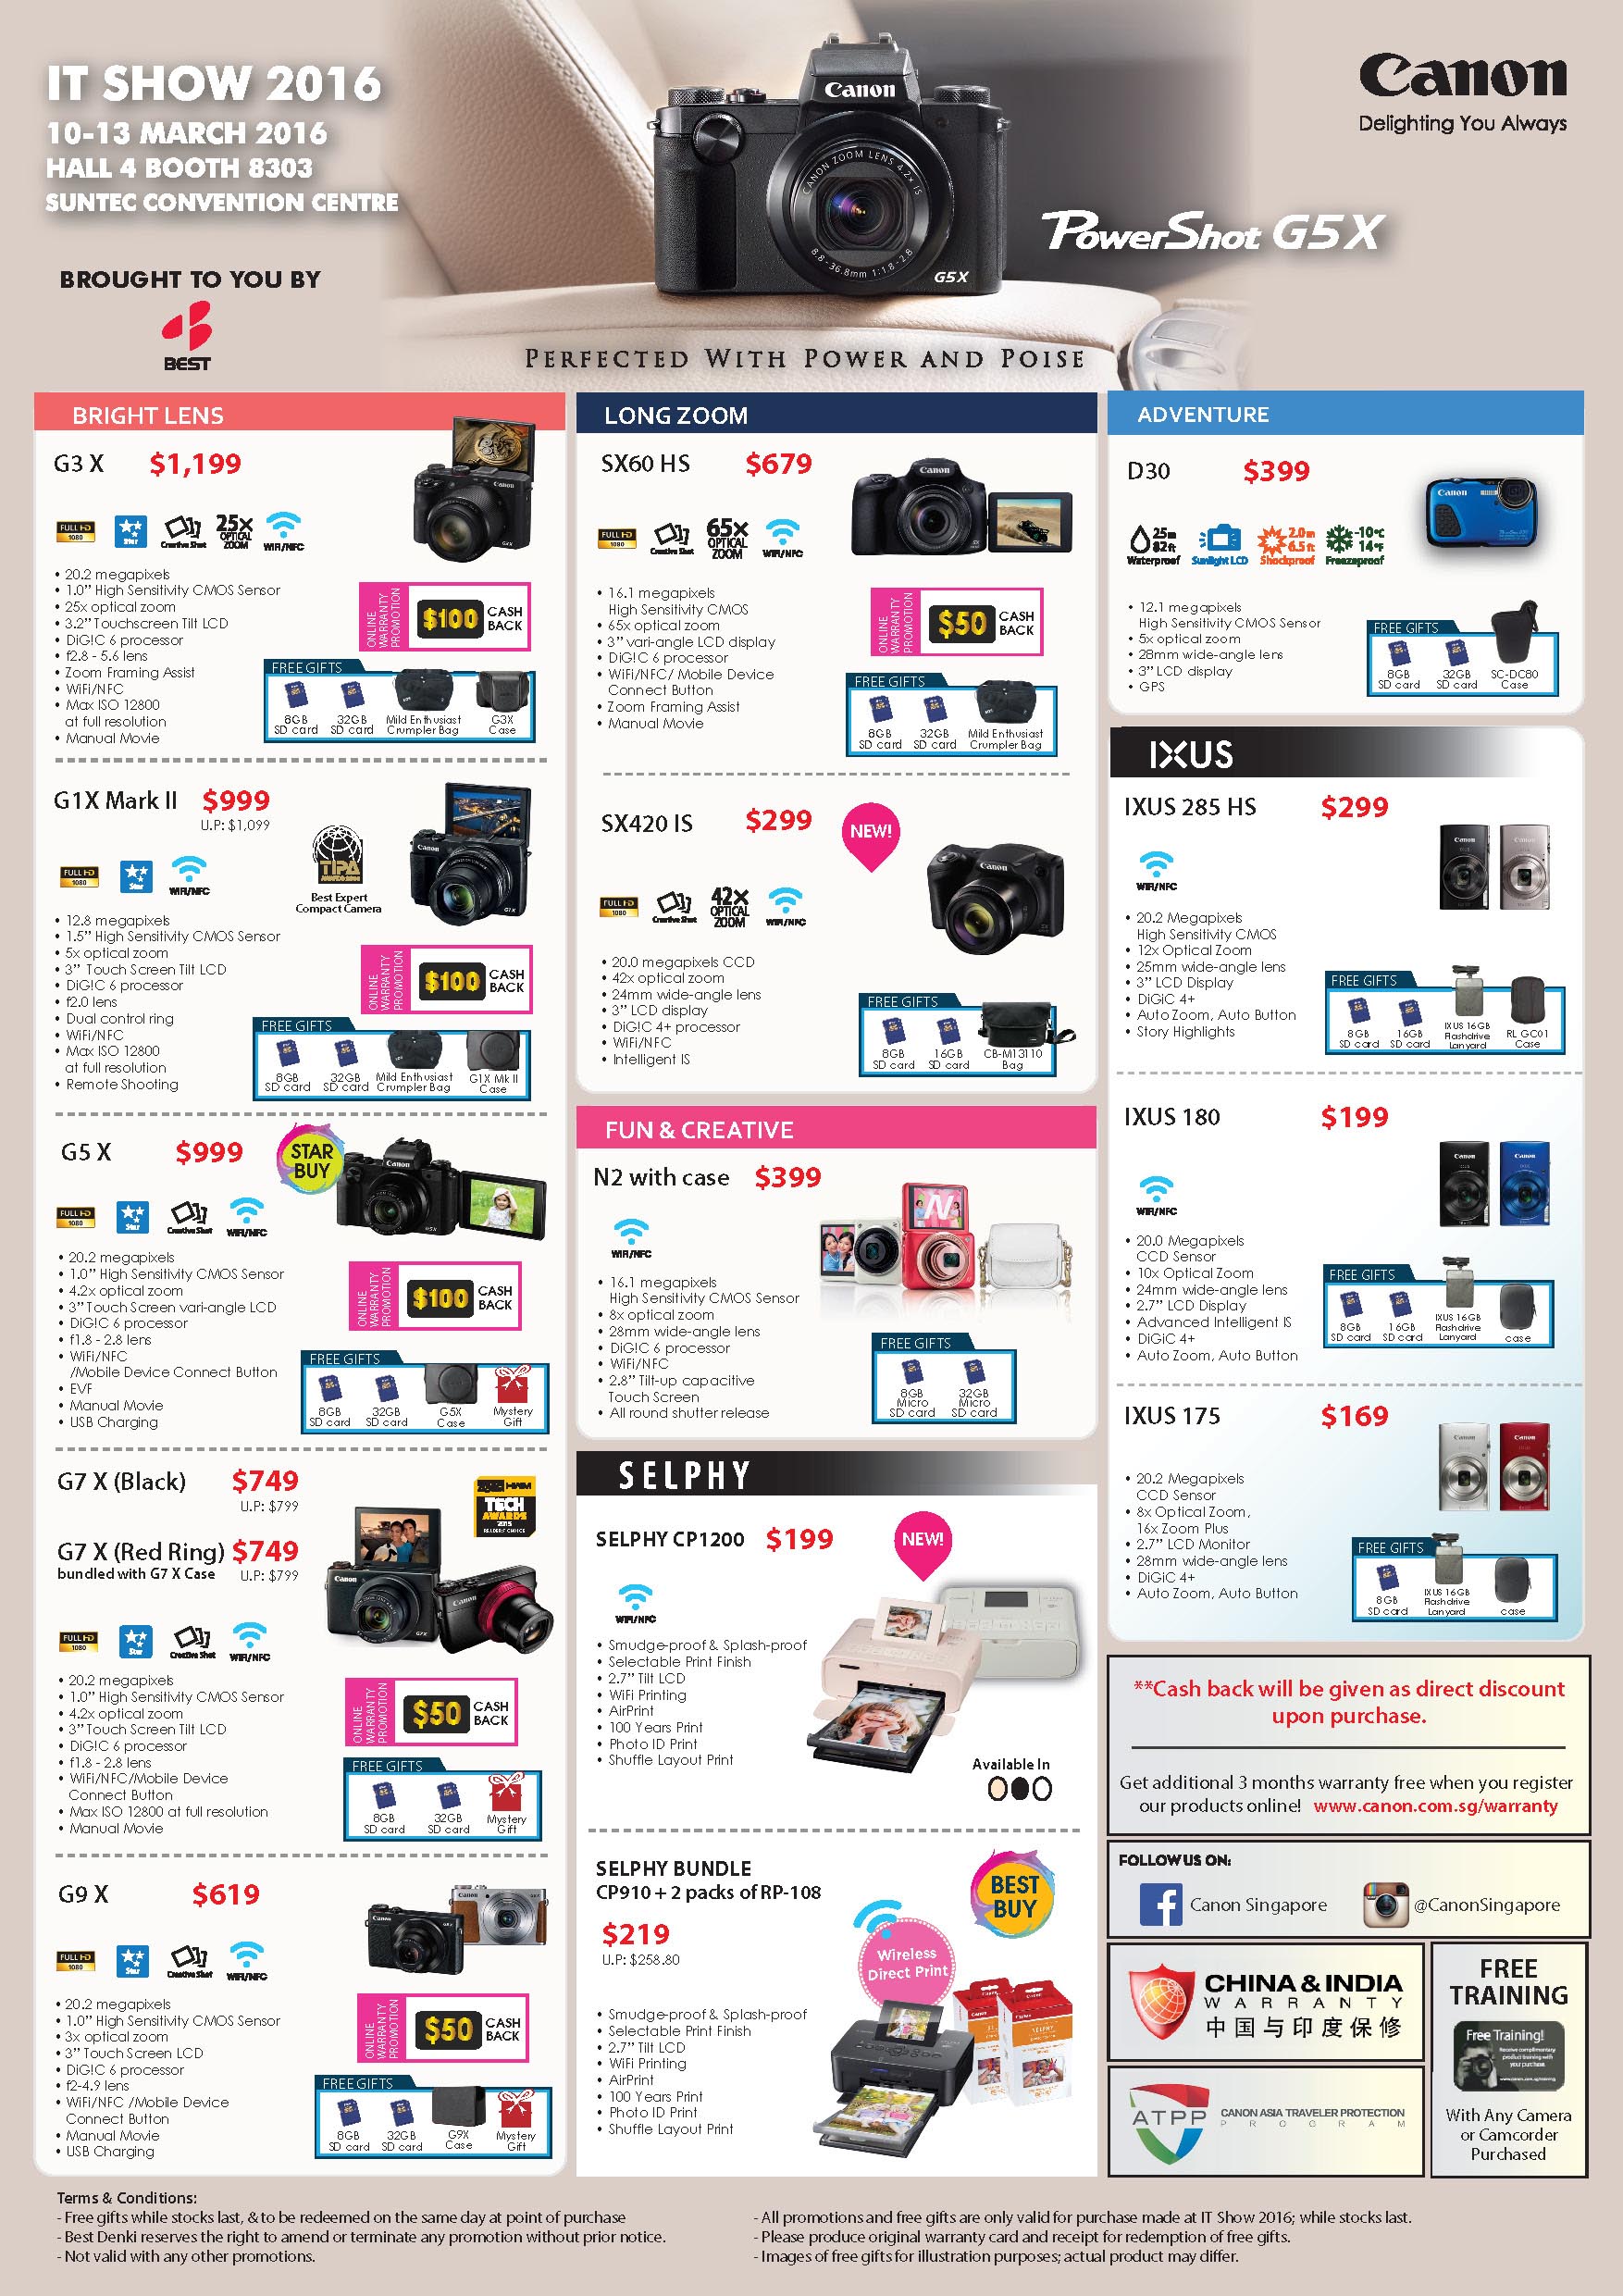 tarwe menigte Samengesteld IT Show 2016: Canon DSLR, Compact Camera and Printer Deals |  SUPERADRIANME.com